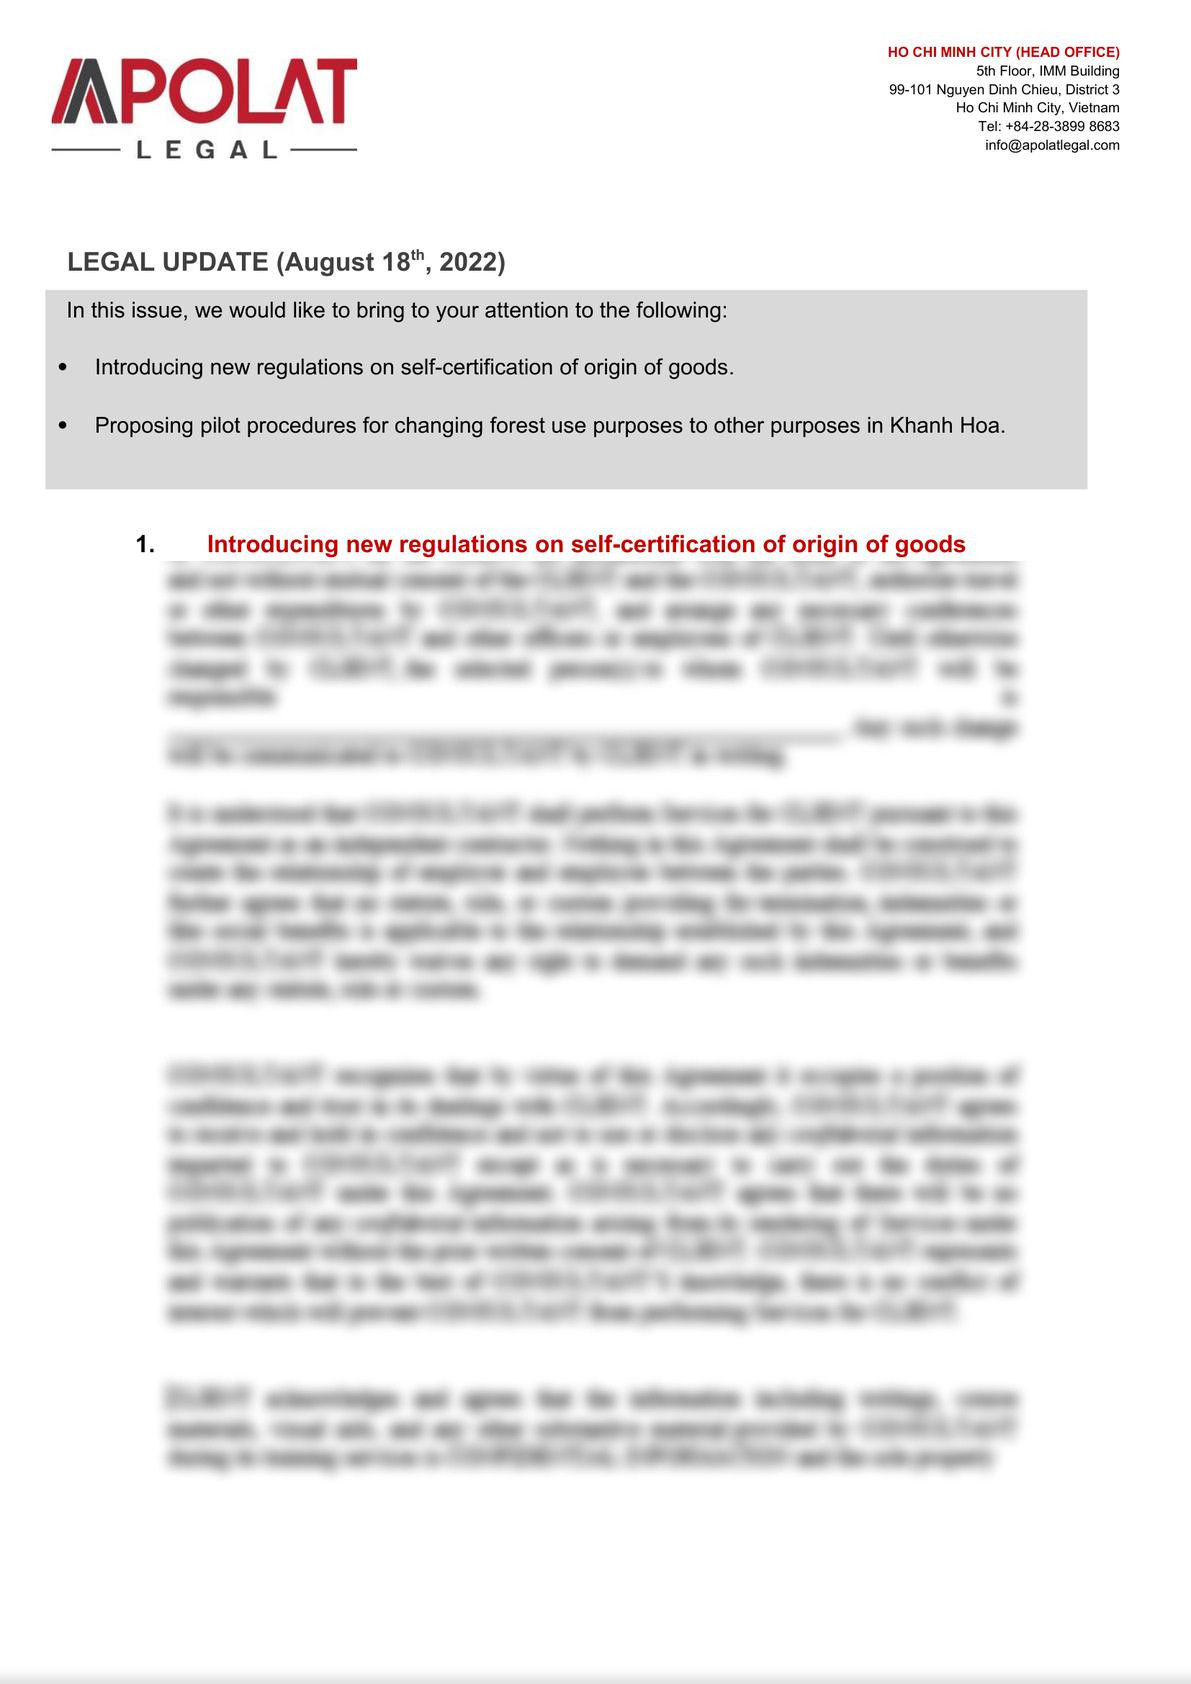 Legal update: Introducing new regulations on self-certification of origin of goods -0